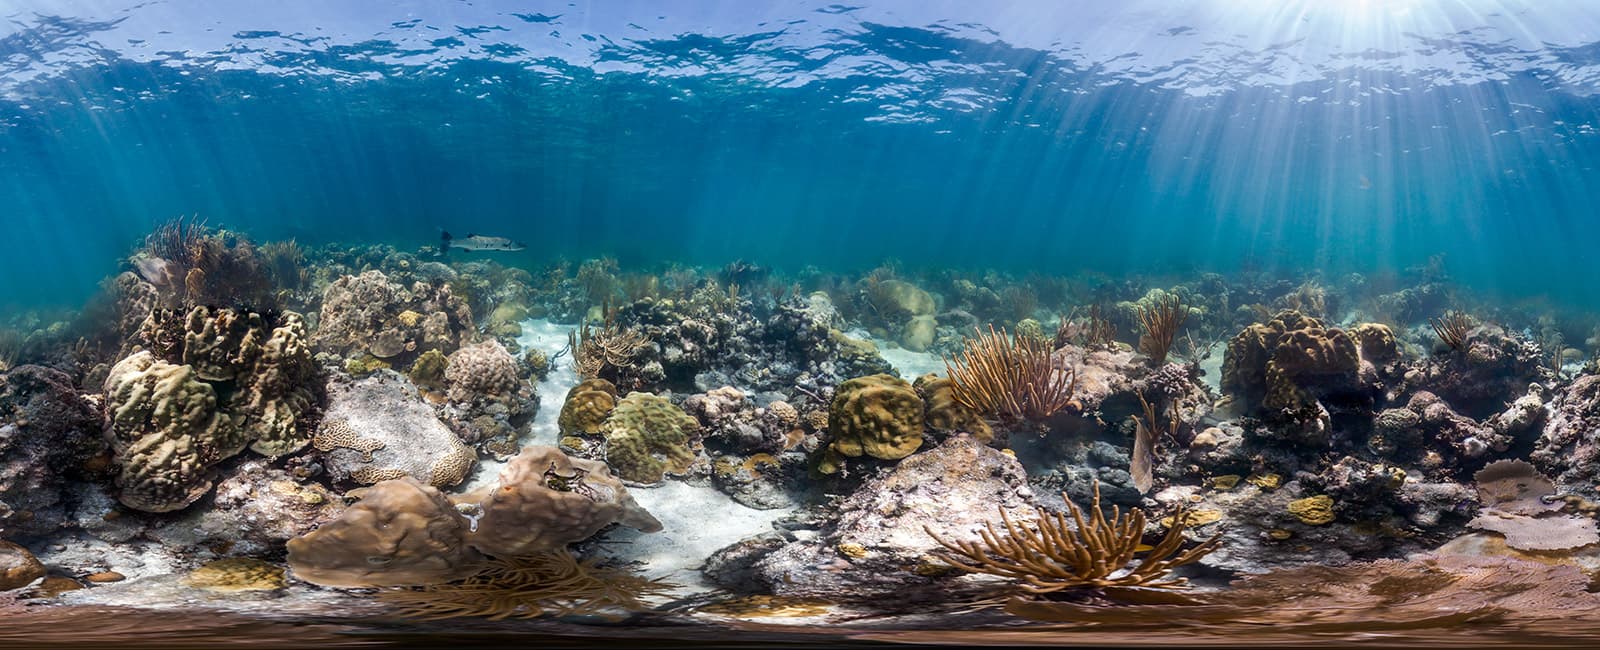 360 imag of cheeca rocks coral reef